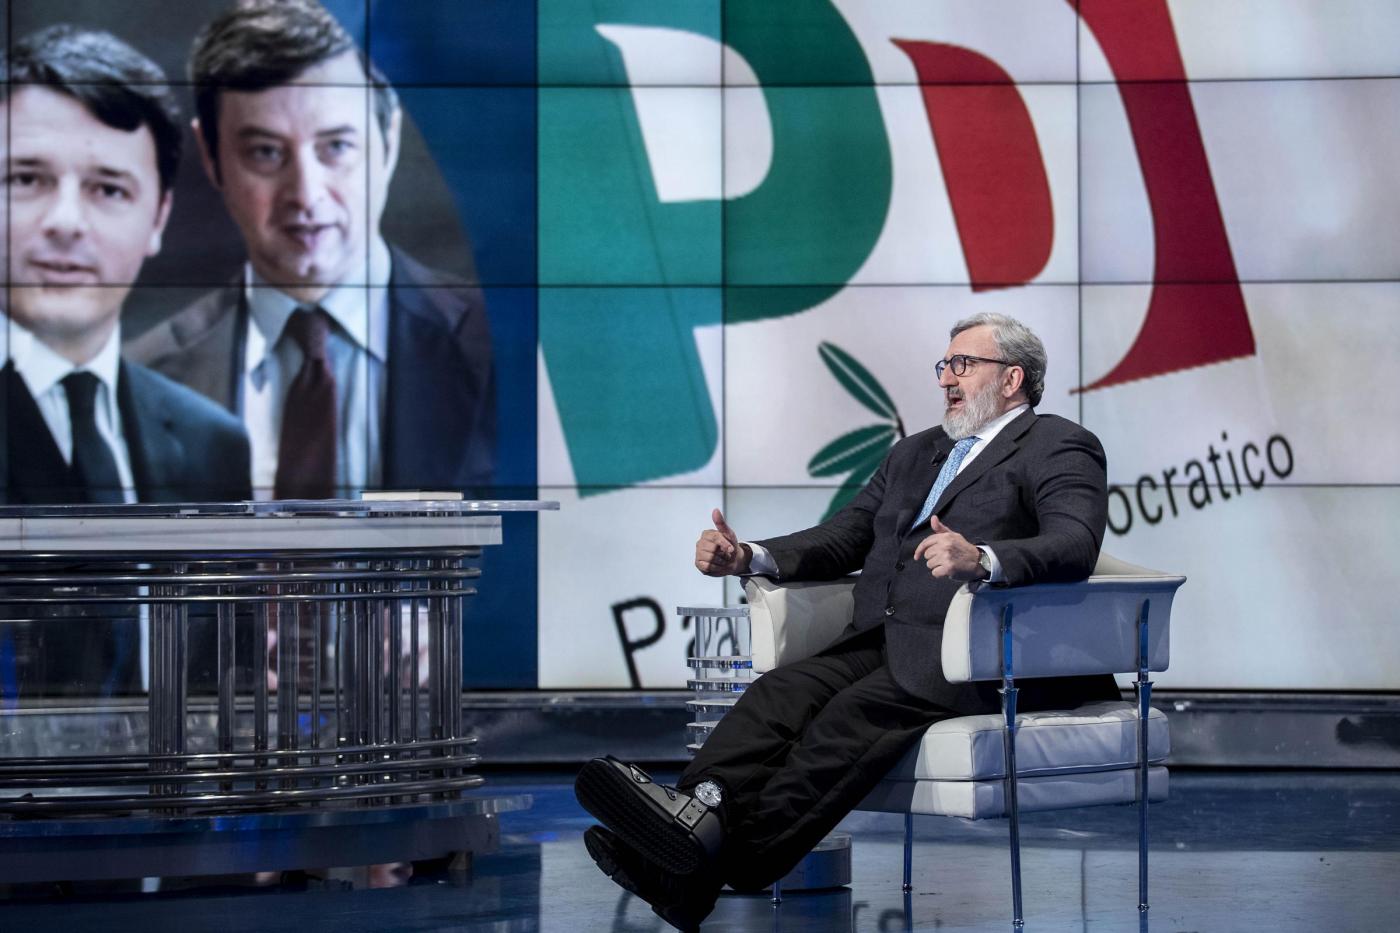 Primarie Pd 2017: chi vota chi? I VIP che votano Renzi, Orlando o Emiliano